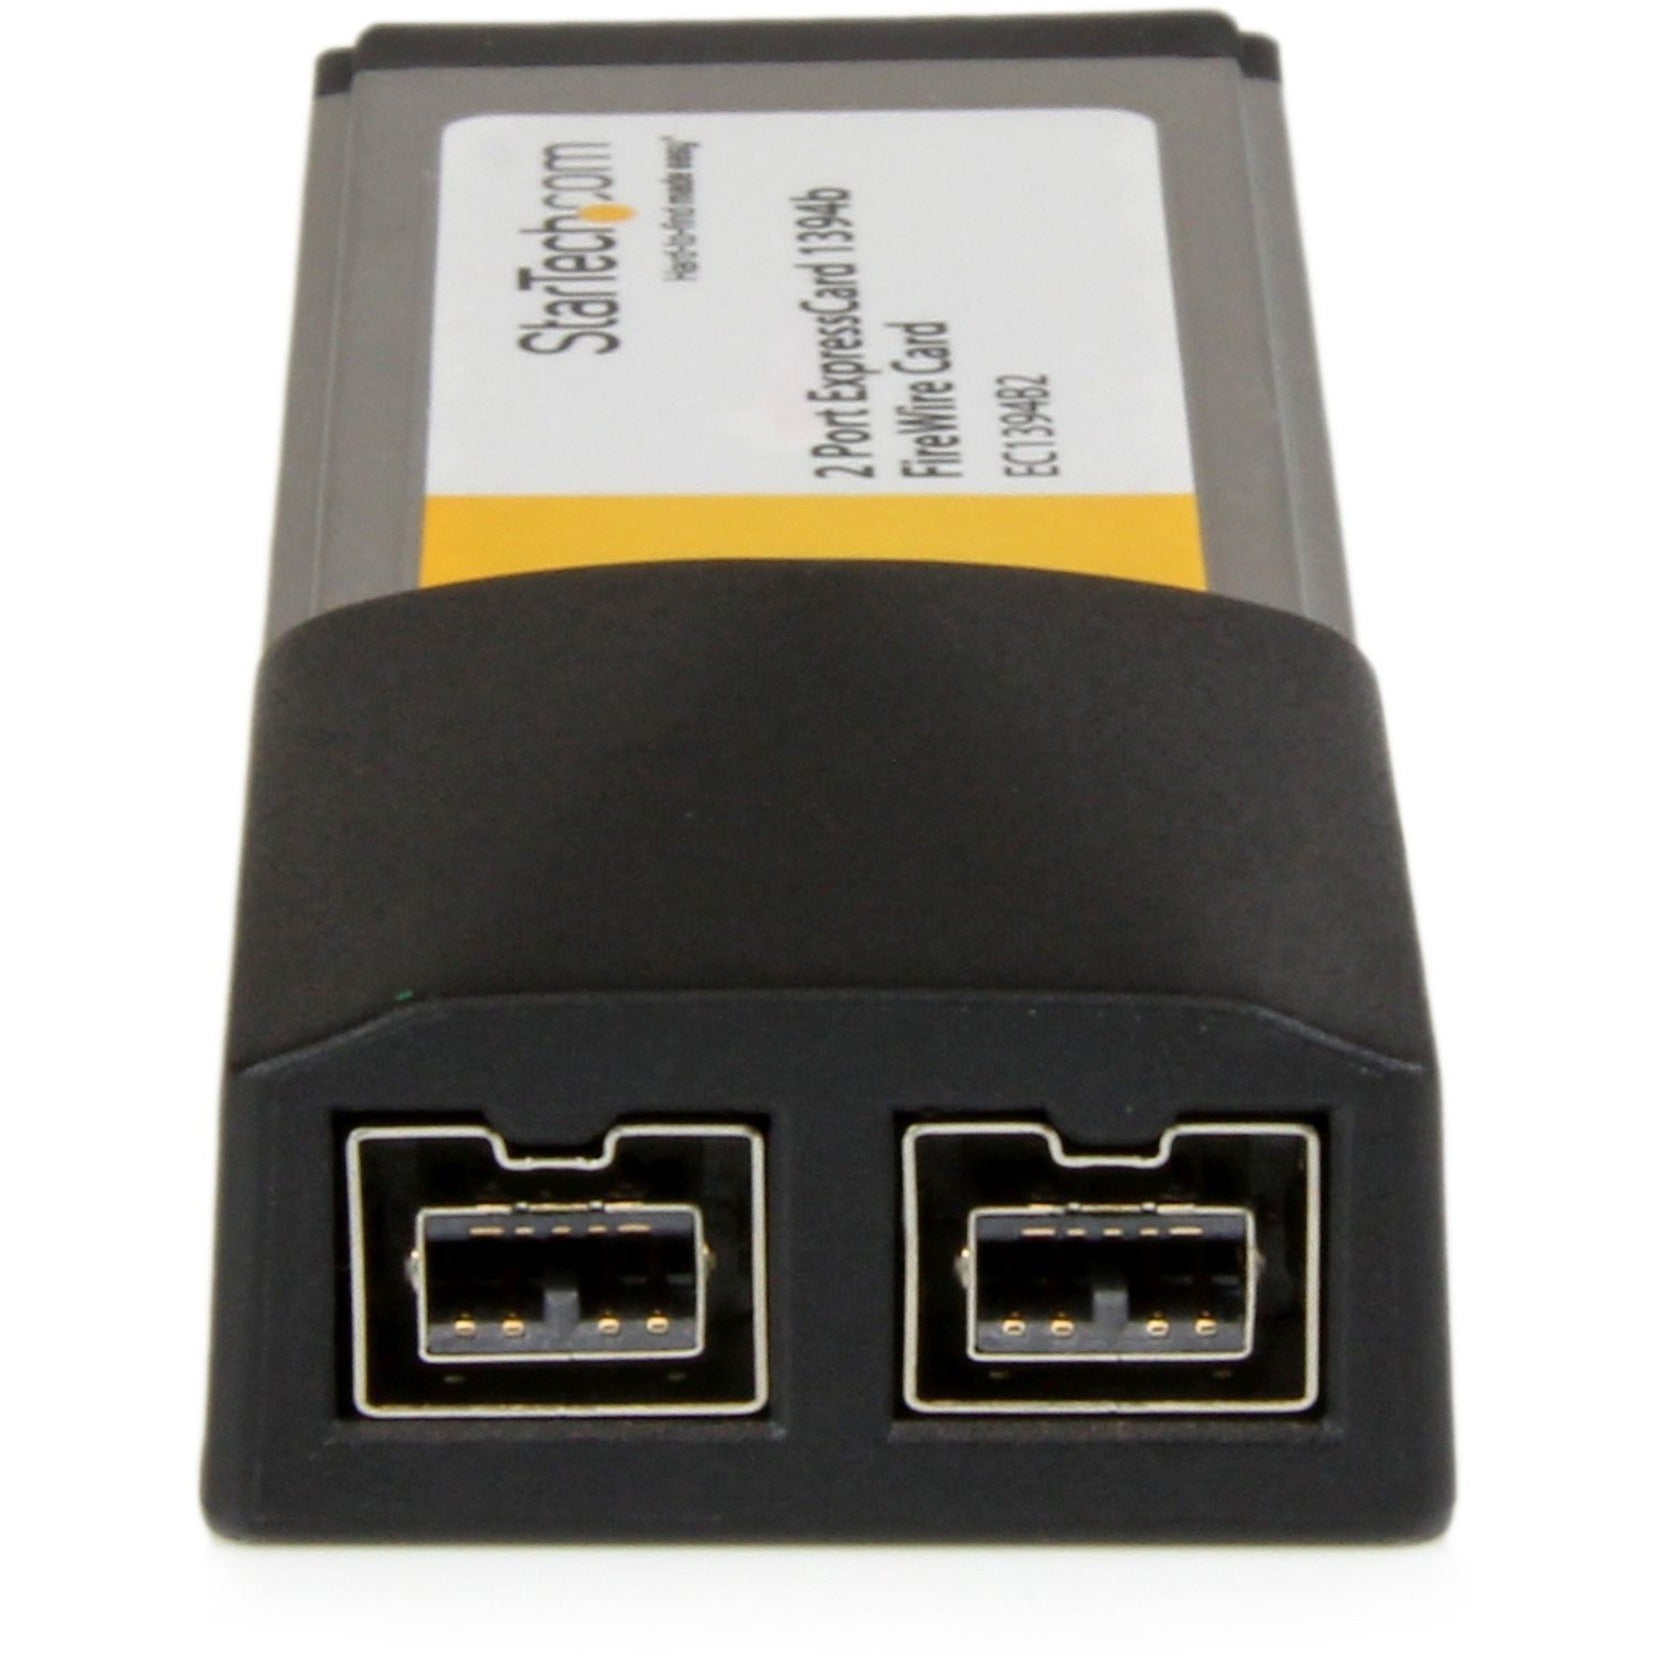 StarTech.com EC1394B2 2 Port ExpressCard FireWire Adapter Card, Add 2 FireWire800 Ports to Your Laptop [Discontinued]